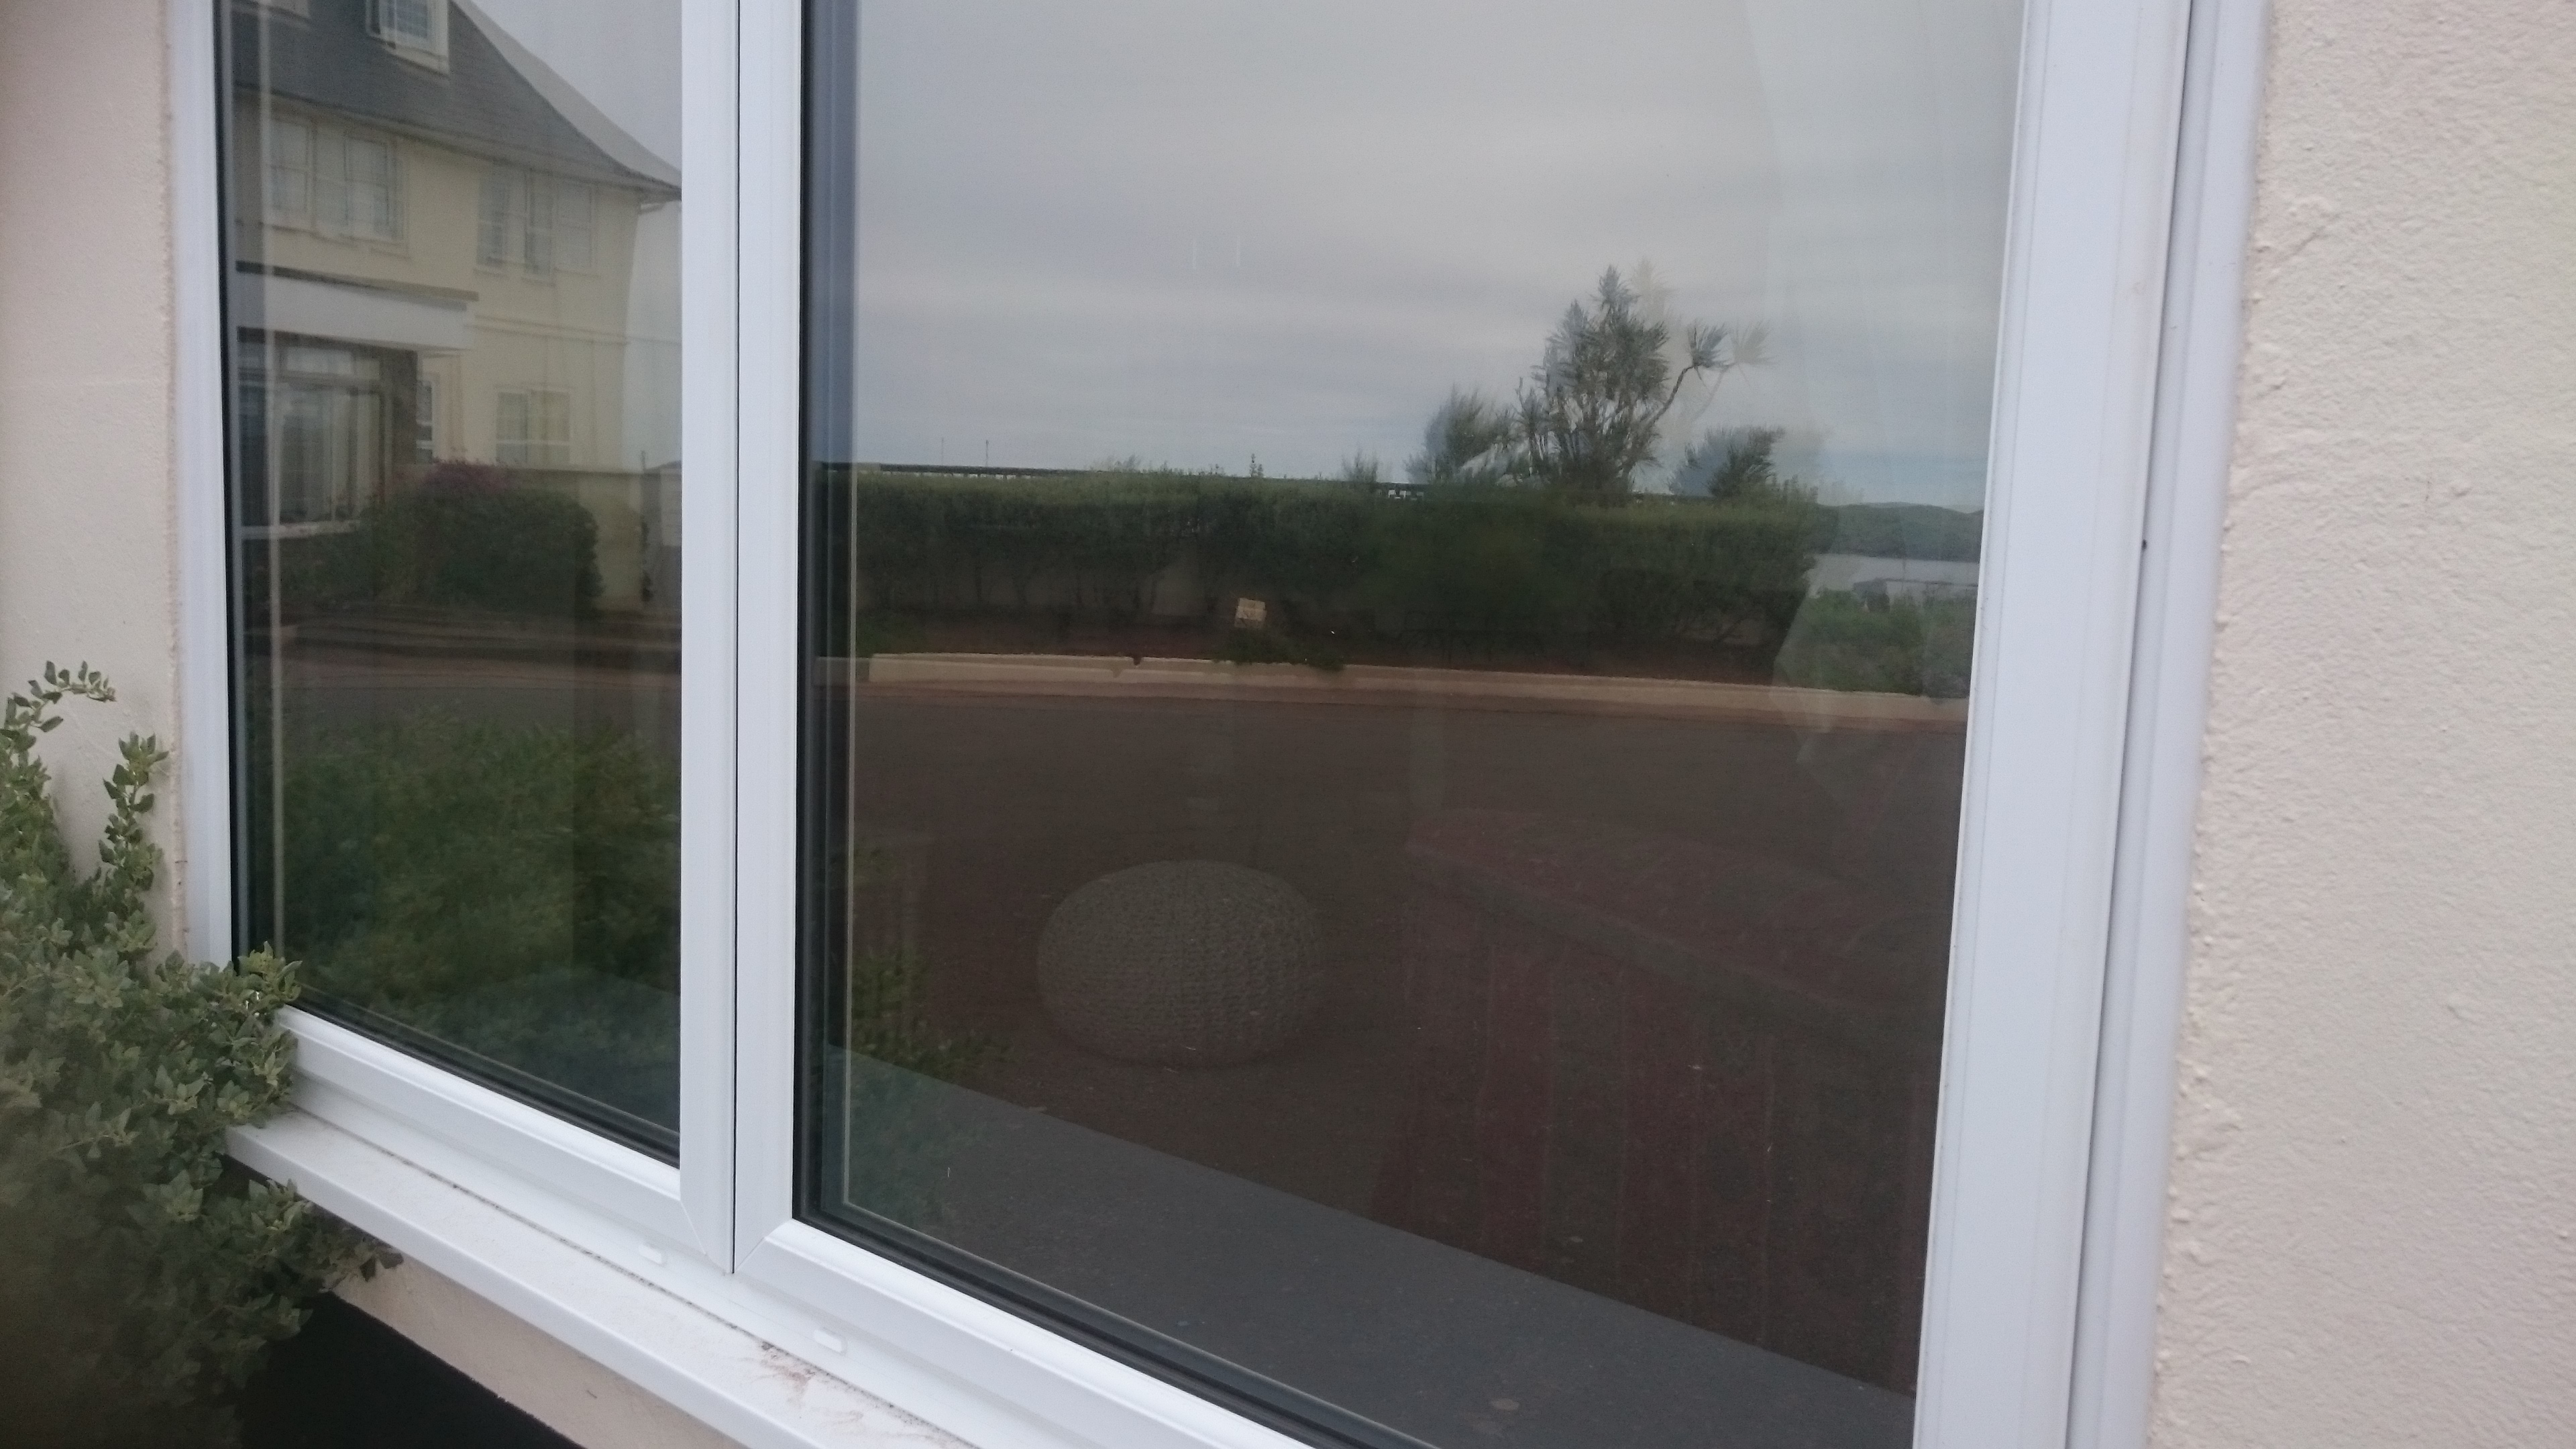 Lounge windows Natural 50 solar window film. Thurlestone Devon. Tinting Express Ltd